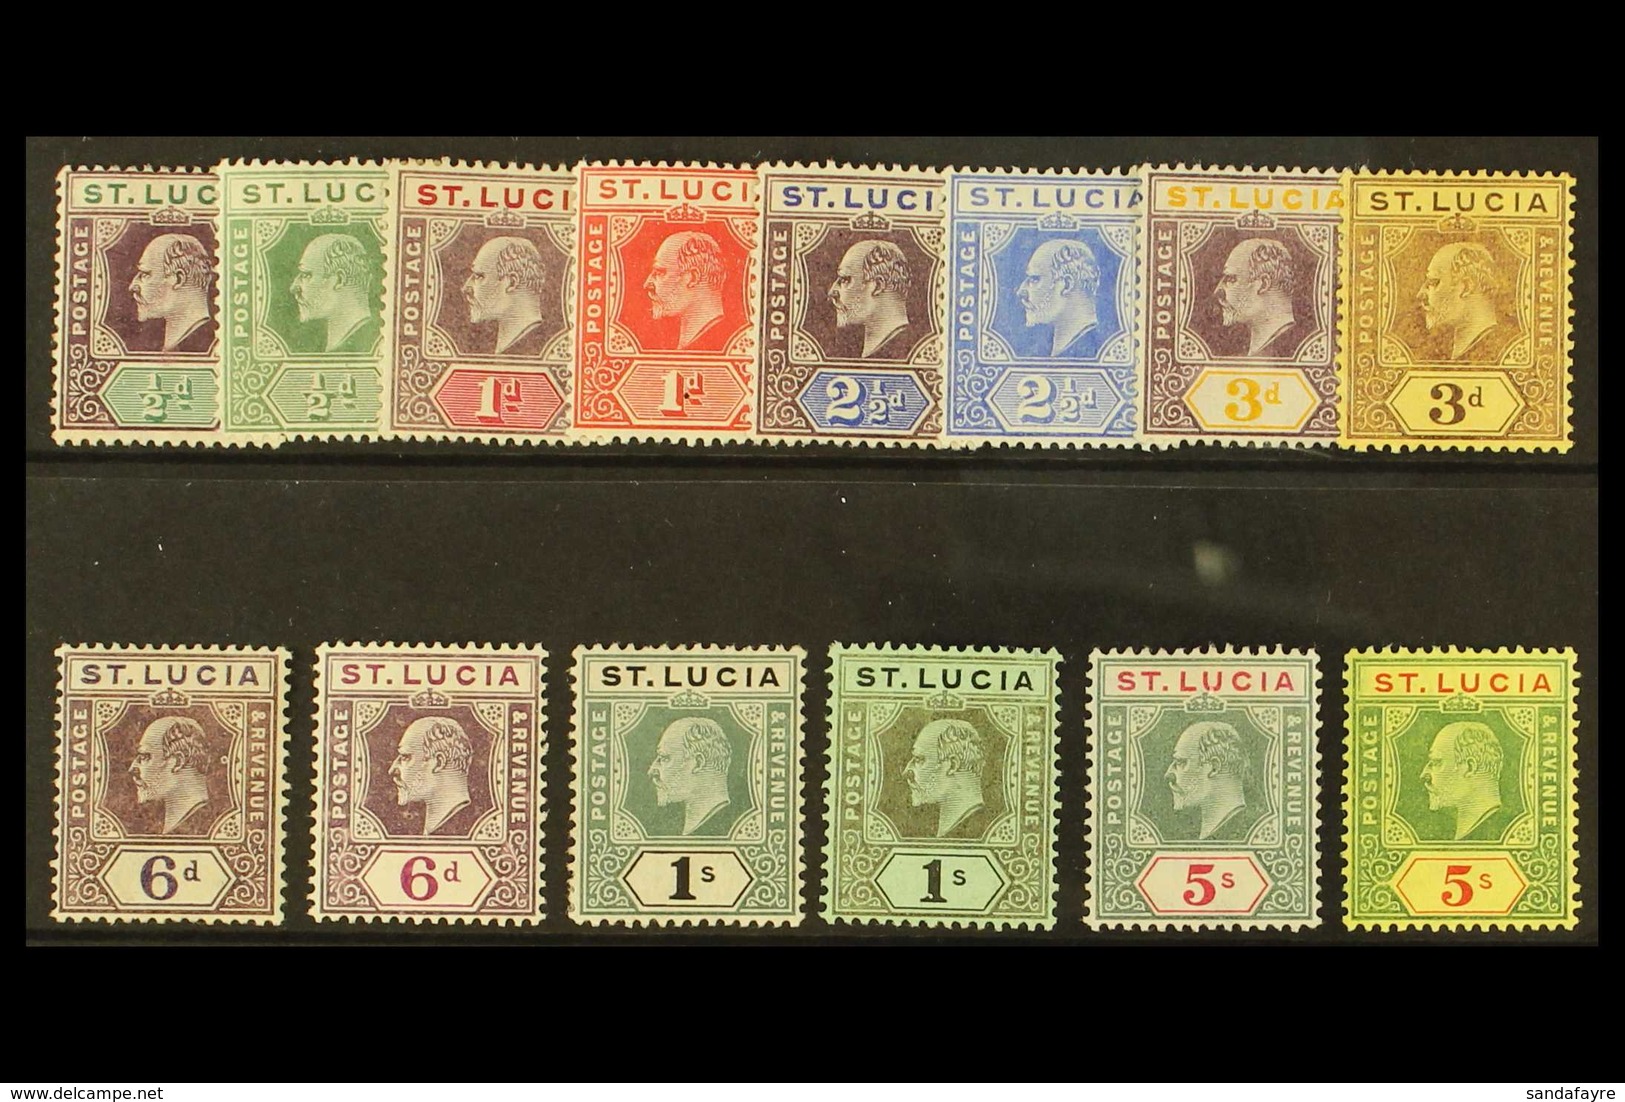 1904-10 Complete King Edward VII Definitive Set, SG 64/77, Fine Mint. (14 Stamps) For More Images, Please Visit Http://w - St.Lucia (...-1978)